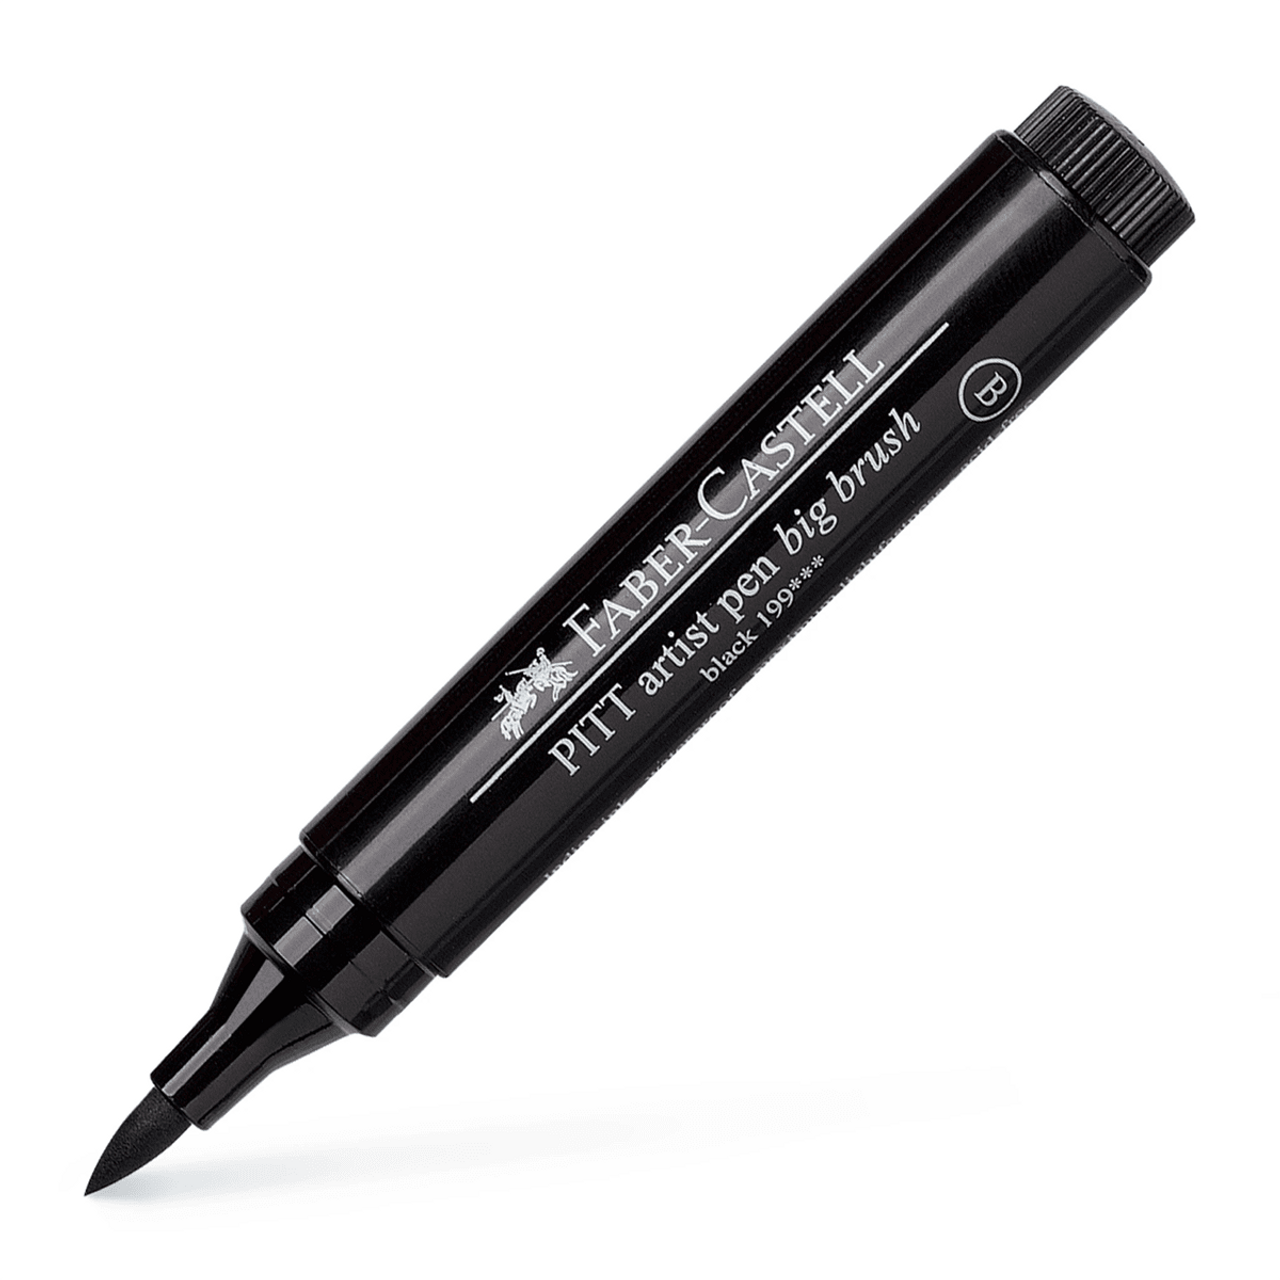 PITT Artist Pen Set of 8 Black - Assorted Sizes